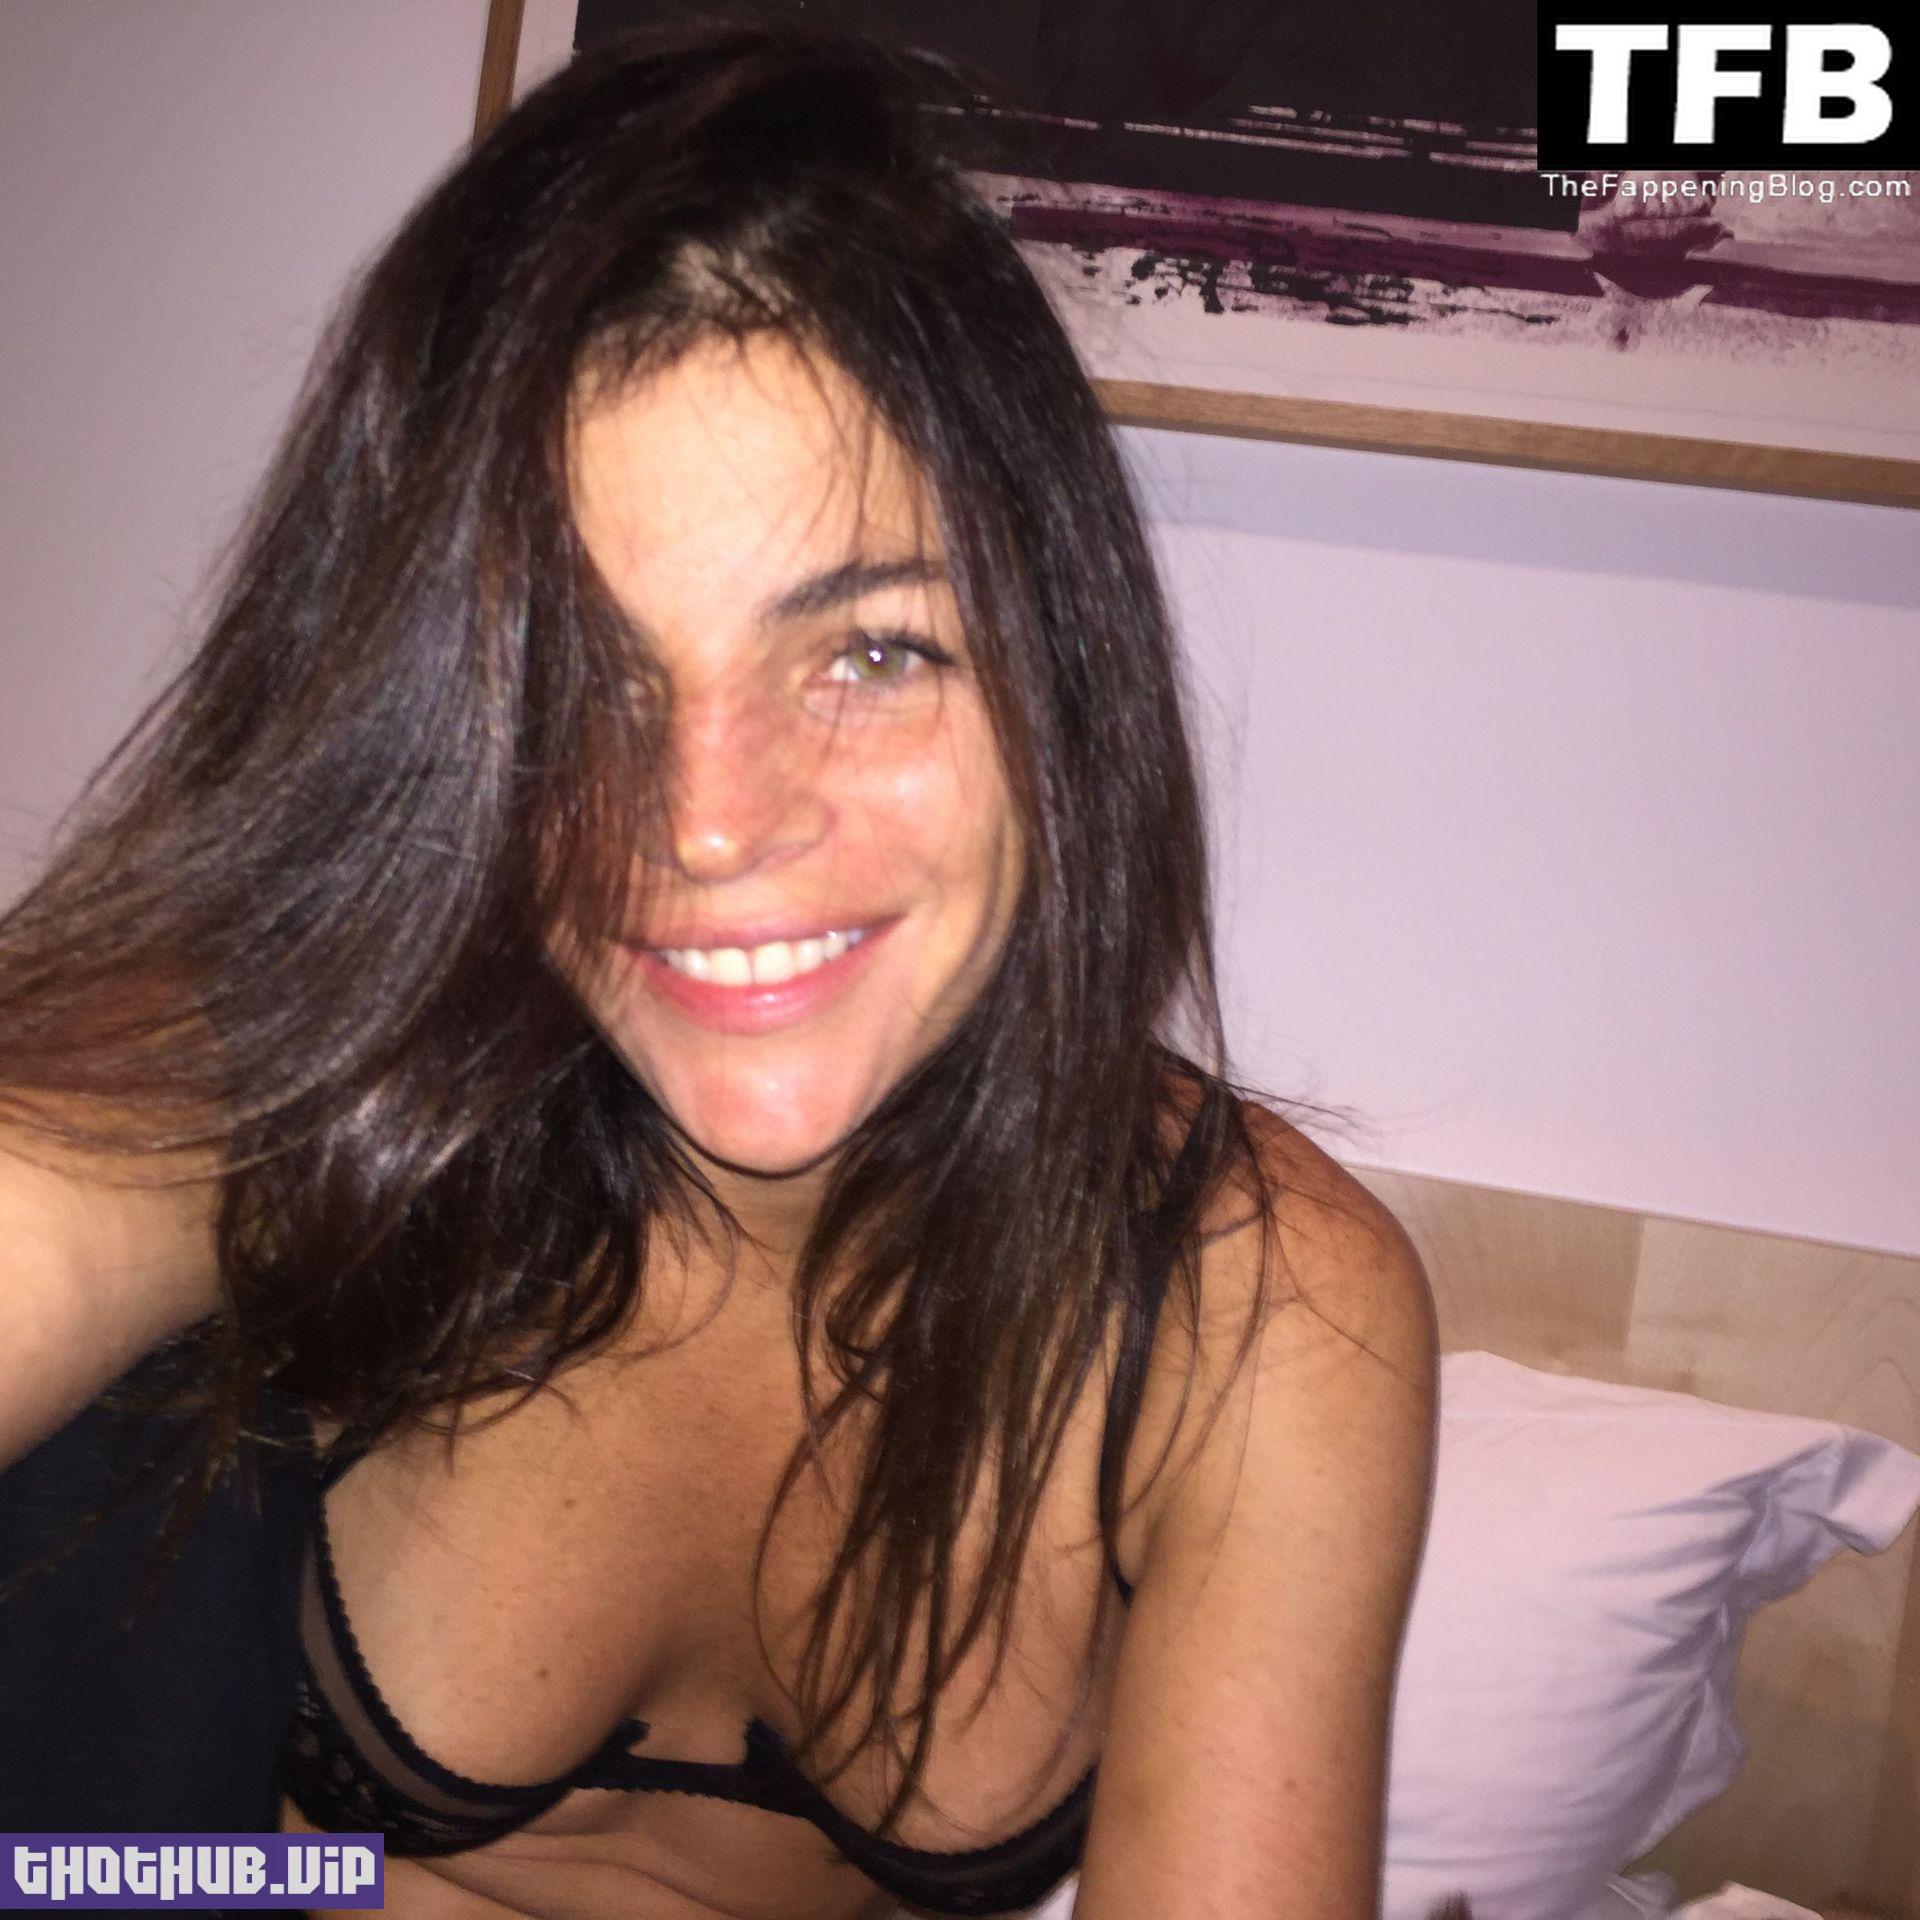 Morgana Balzarotti Nude Sexy Leaked The Fappening Blog 8 1